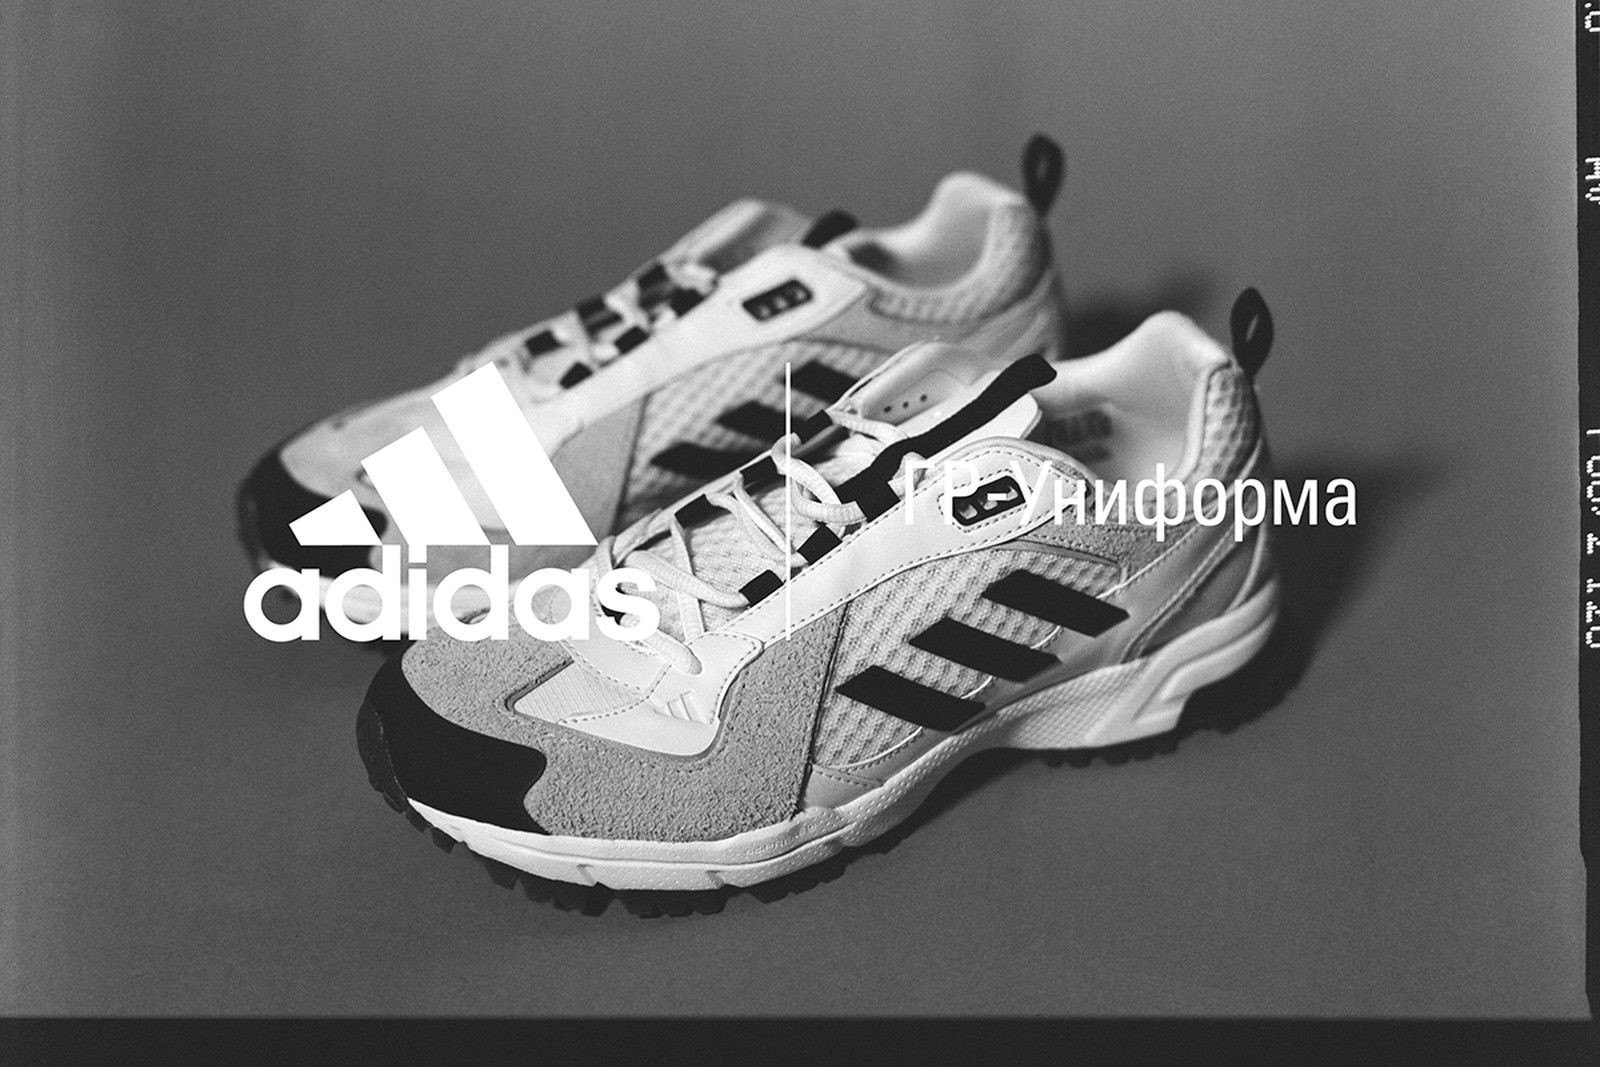 Gosha Rubchinskiy and adidas are back under the GR-Uniforma 